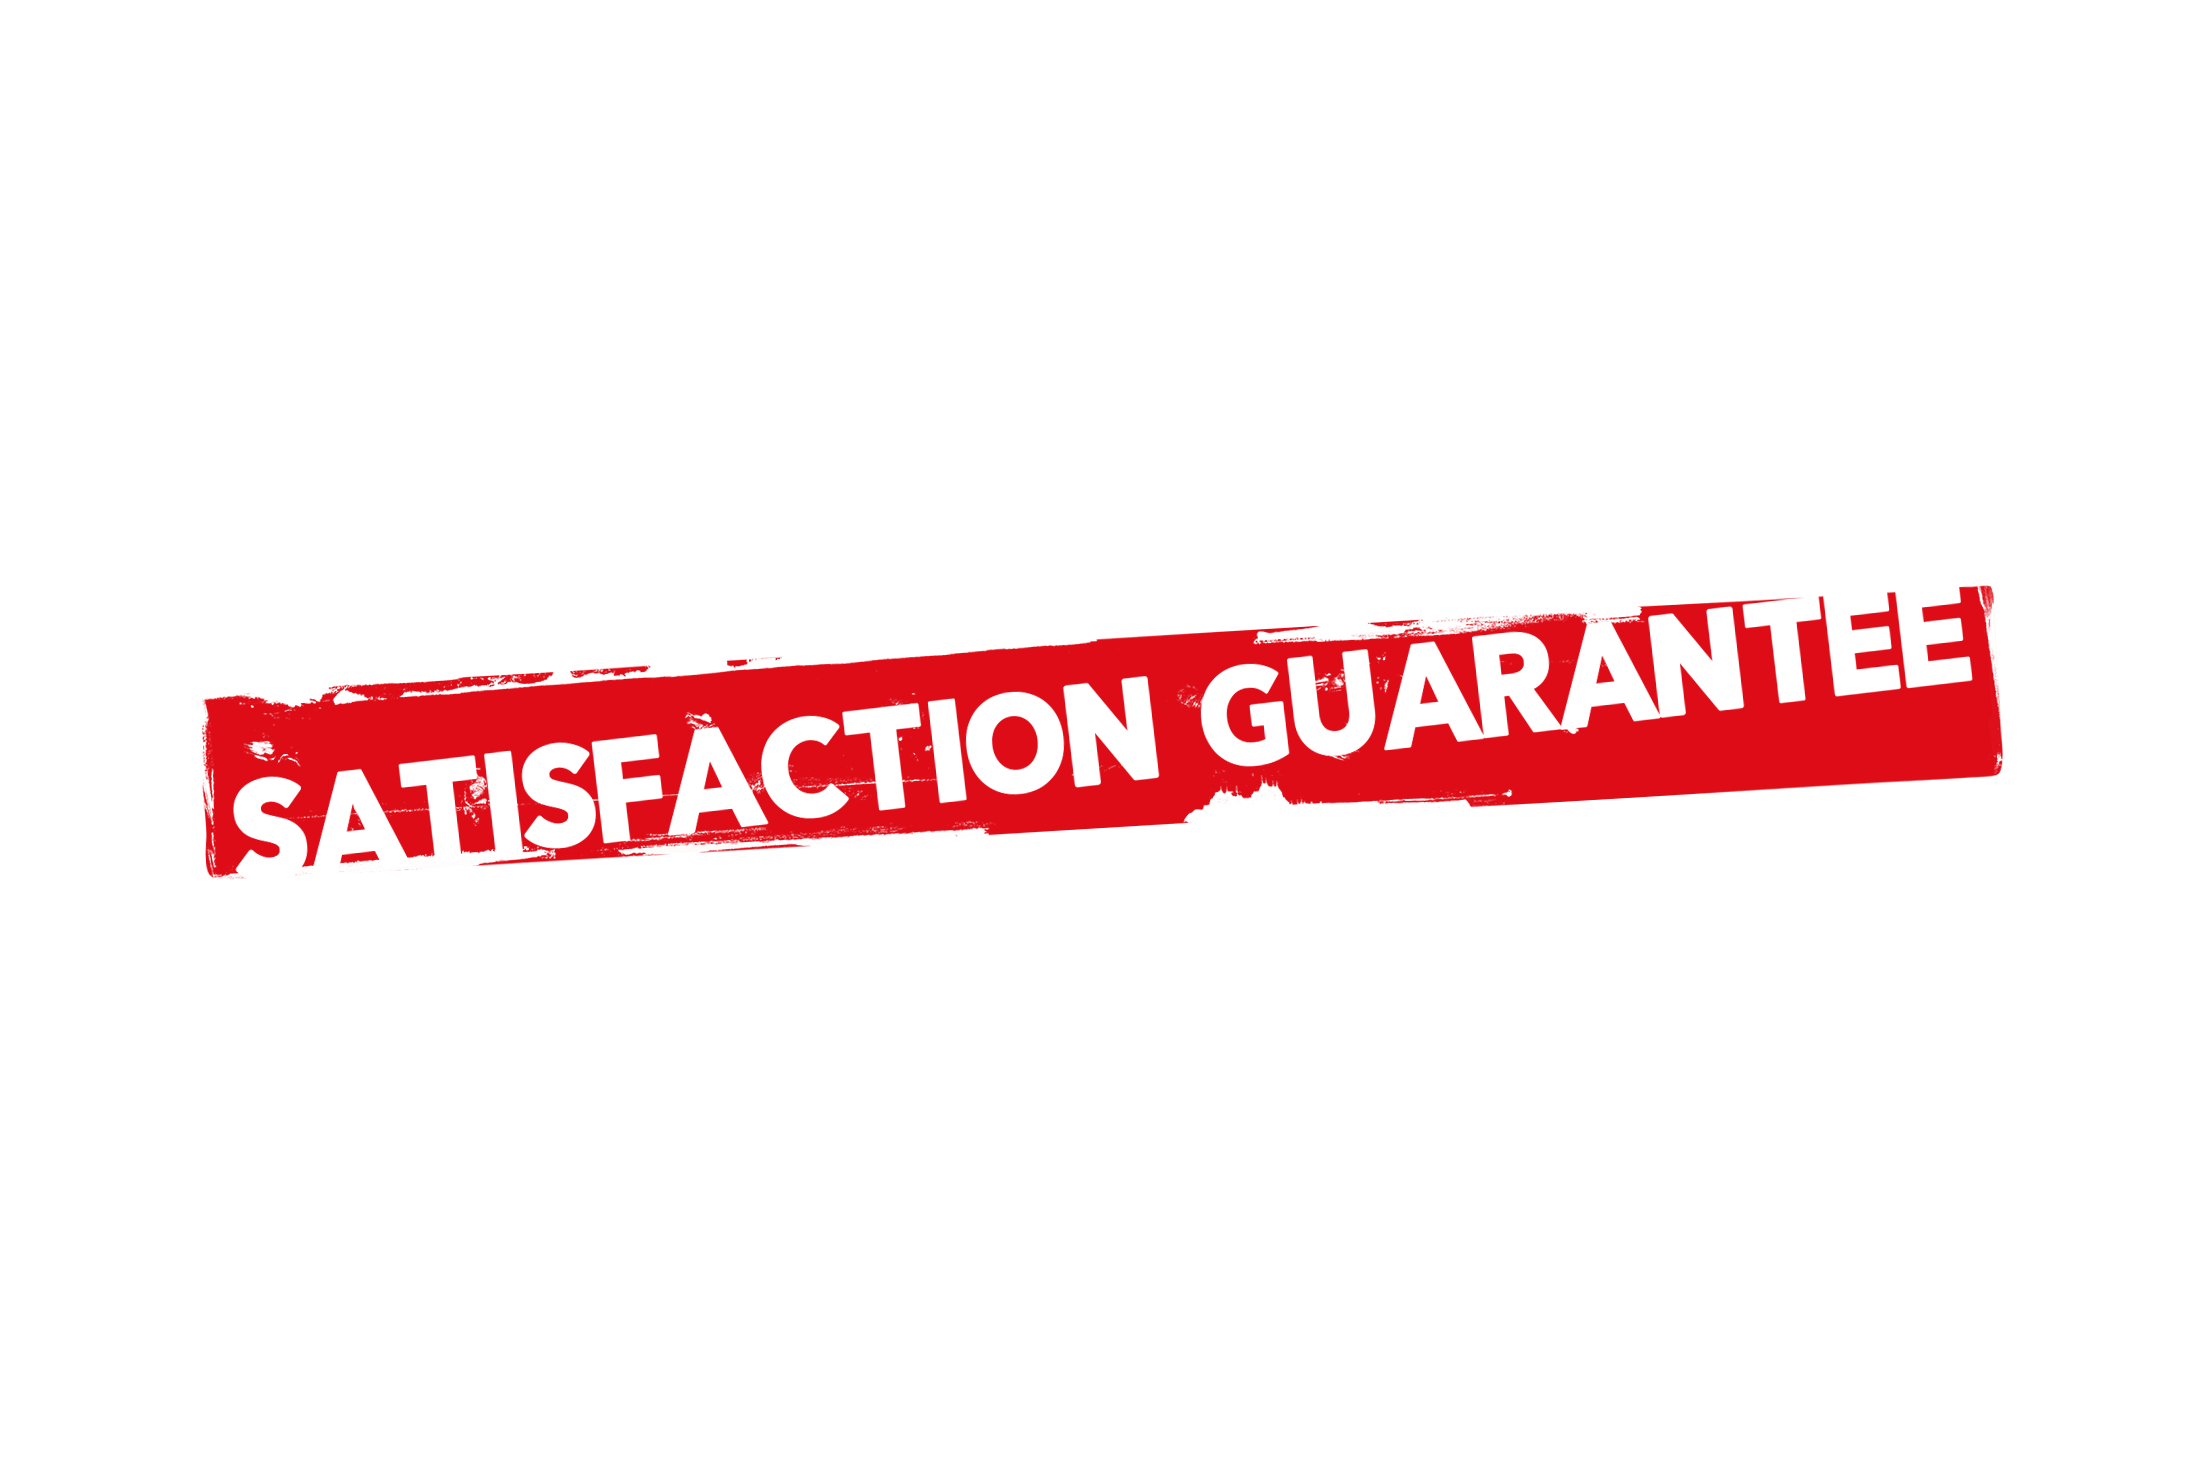 Grunge satisfaction guarantee label PSD